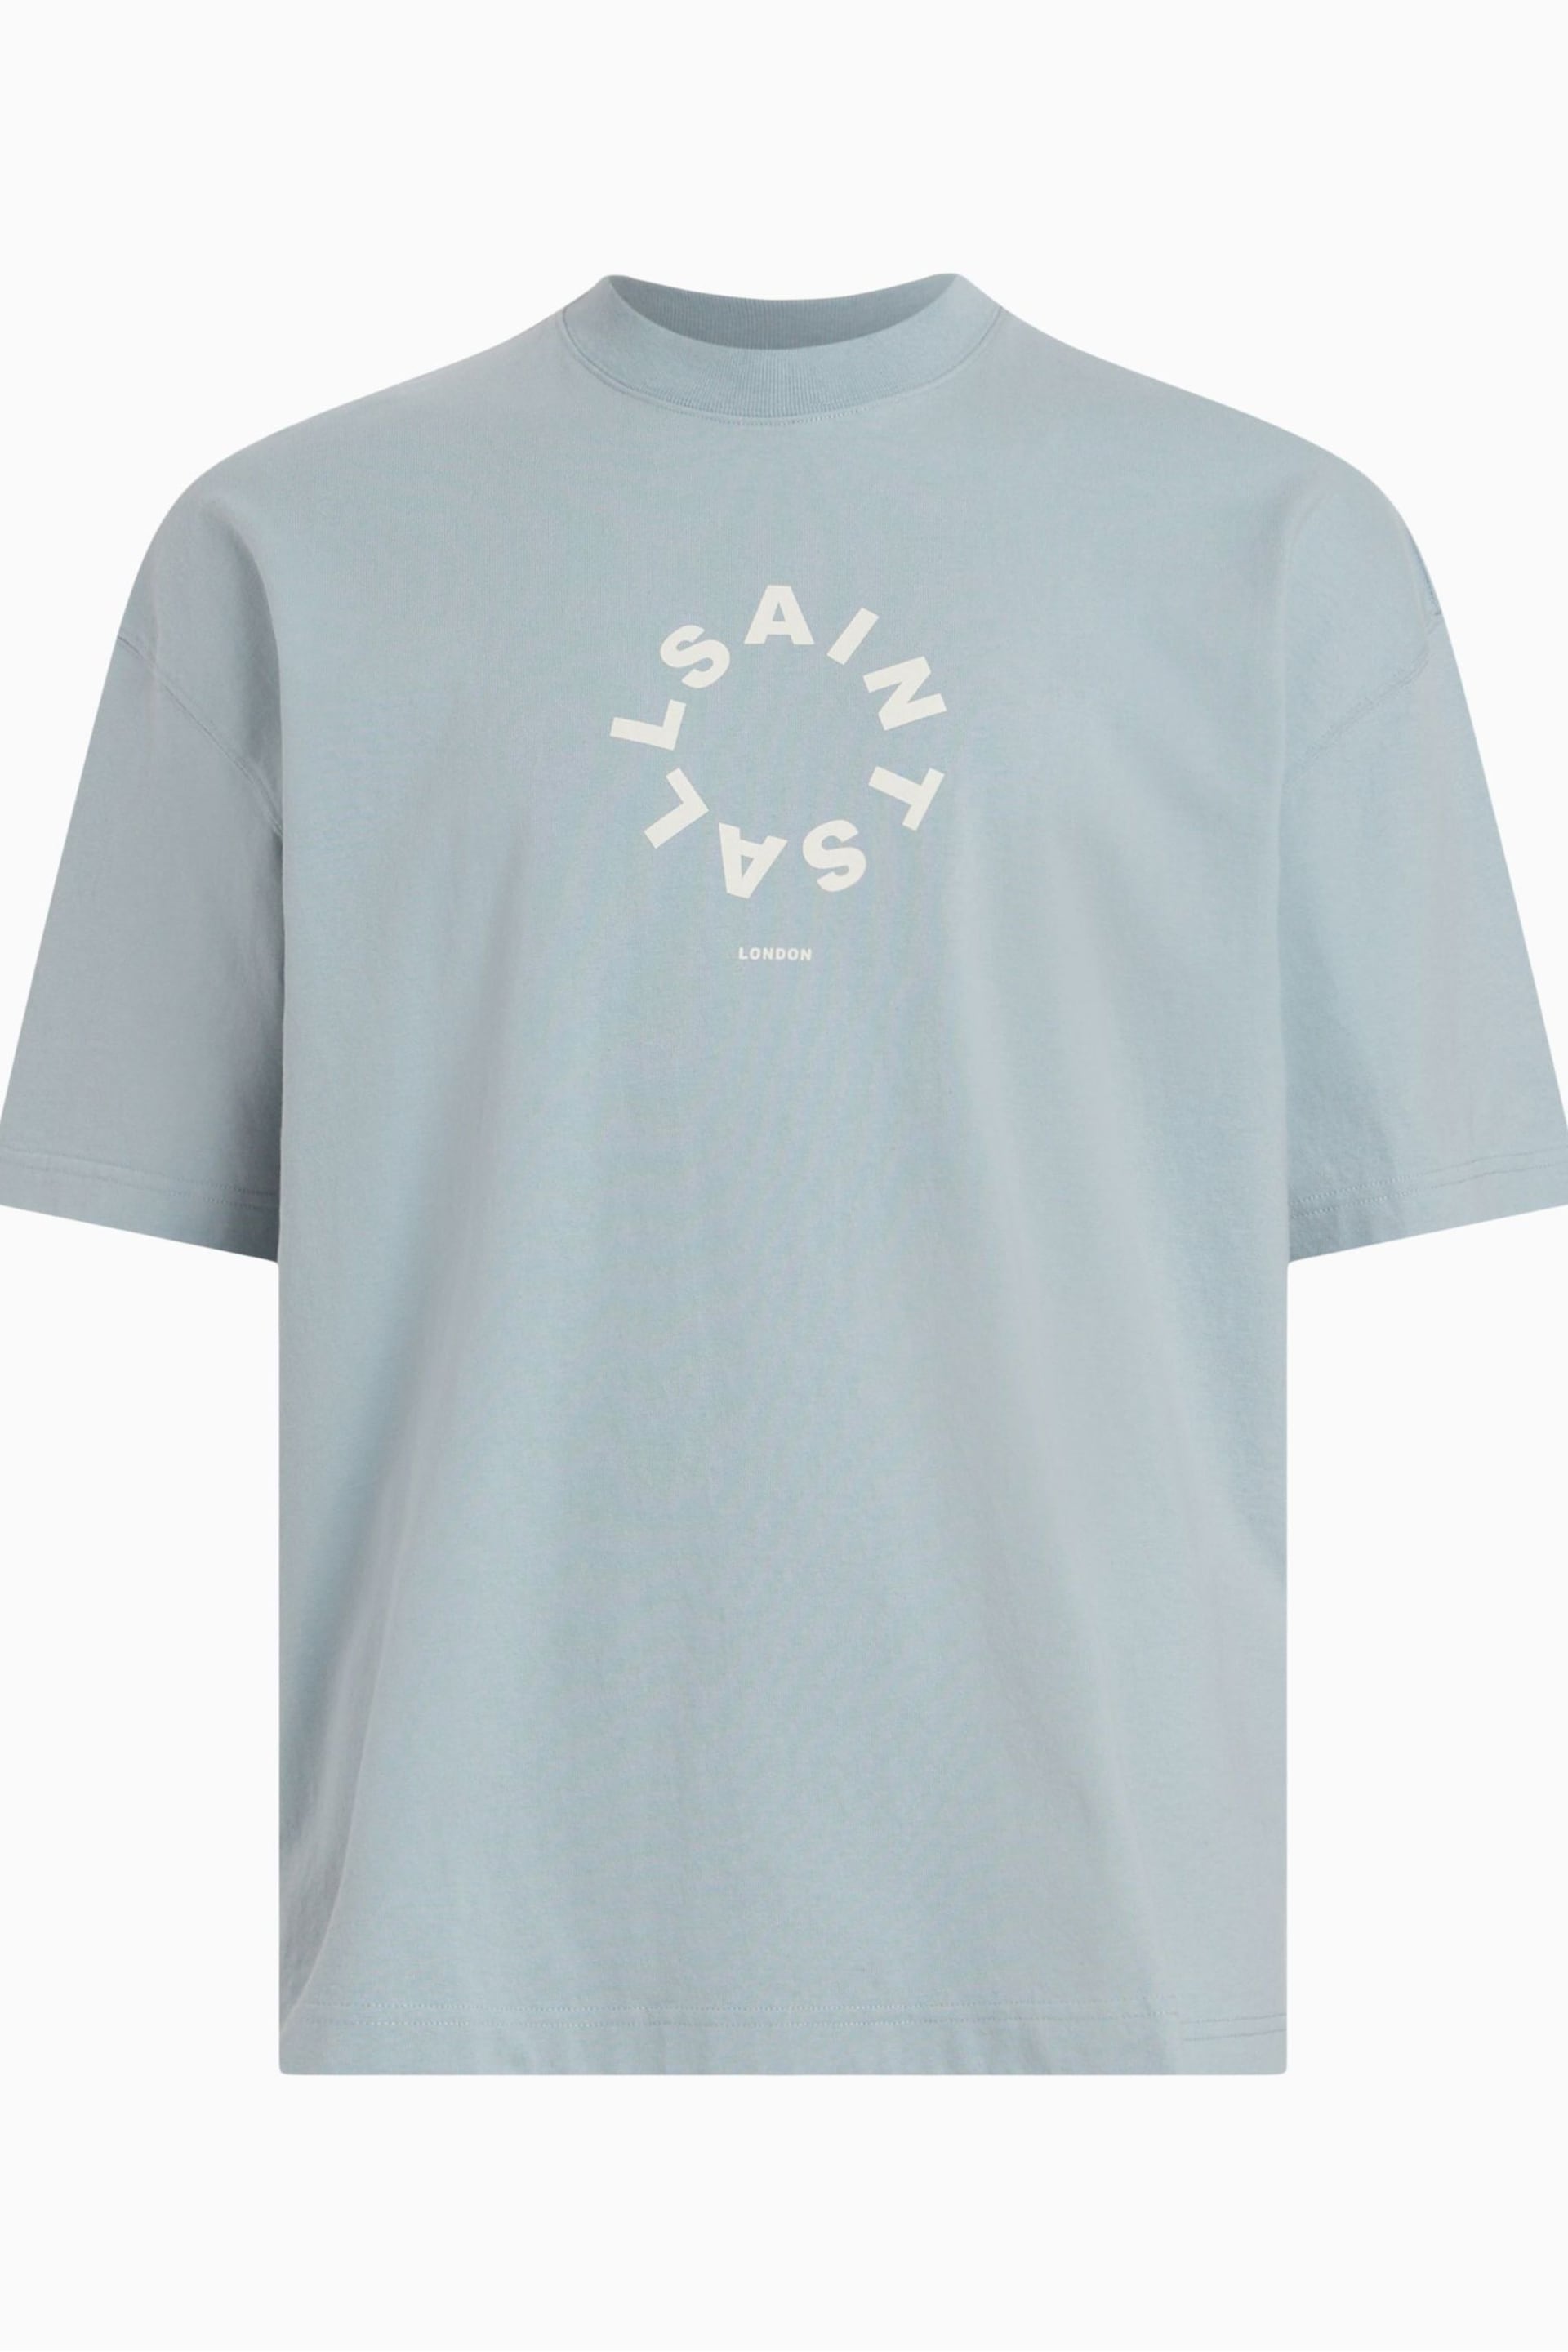 AllSaints Blue Tierra Crew T-Shirt - Image 6 of 6